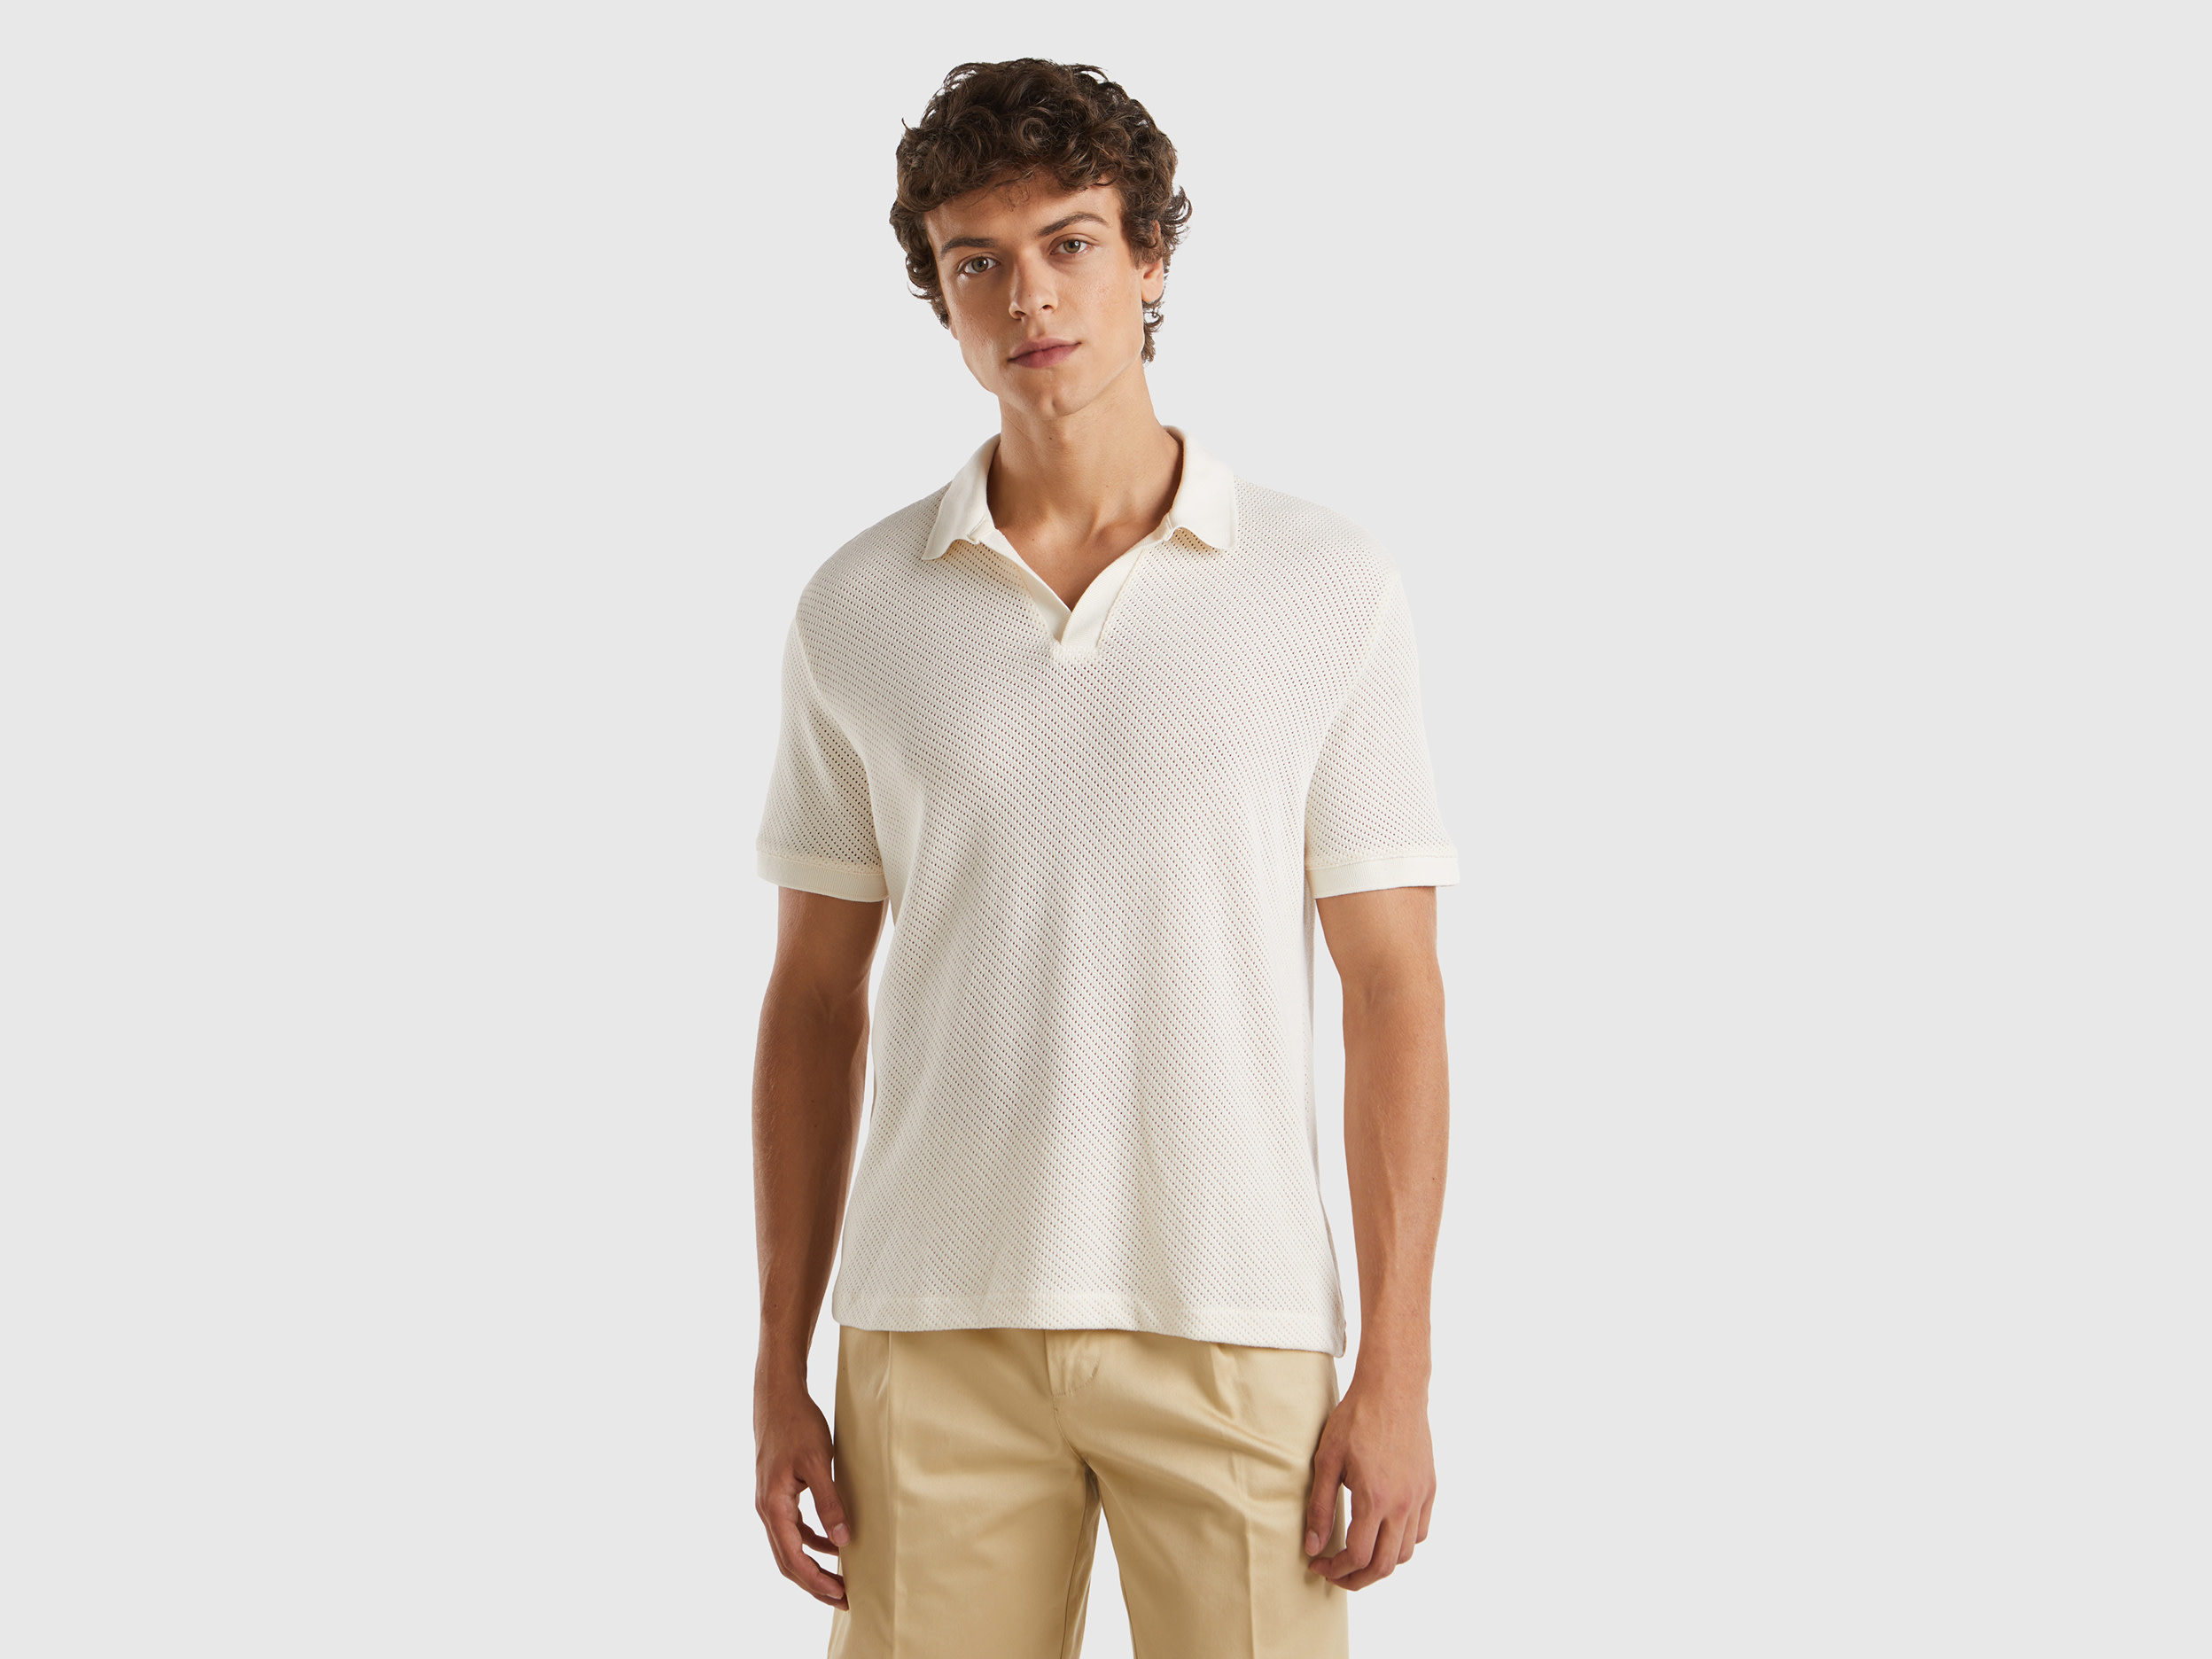 Image of Benetton, Perforated Cotton Polo Shirt, size XS, Creamy White, Men